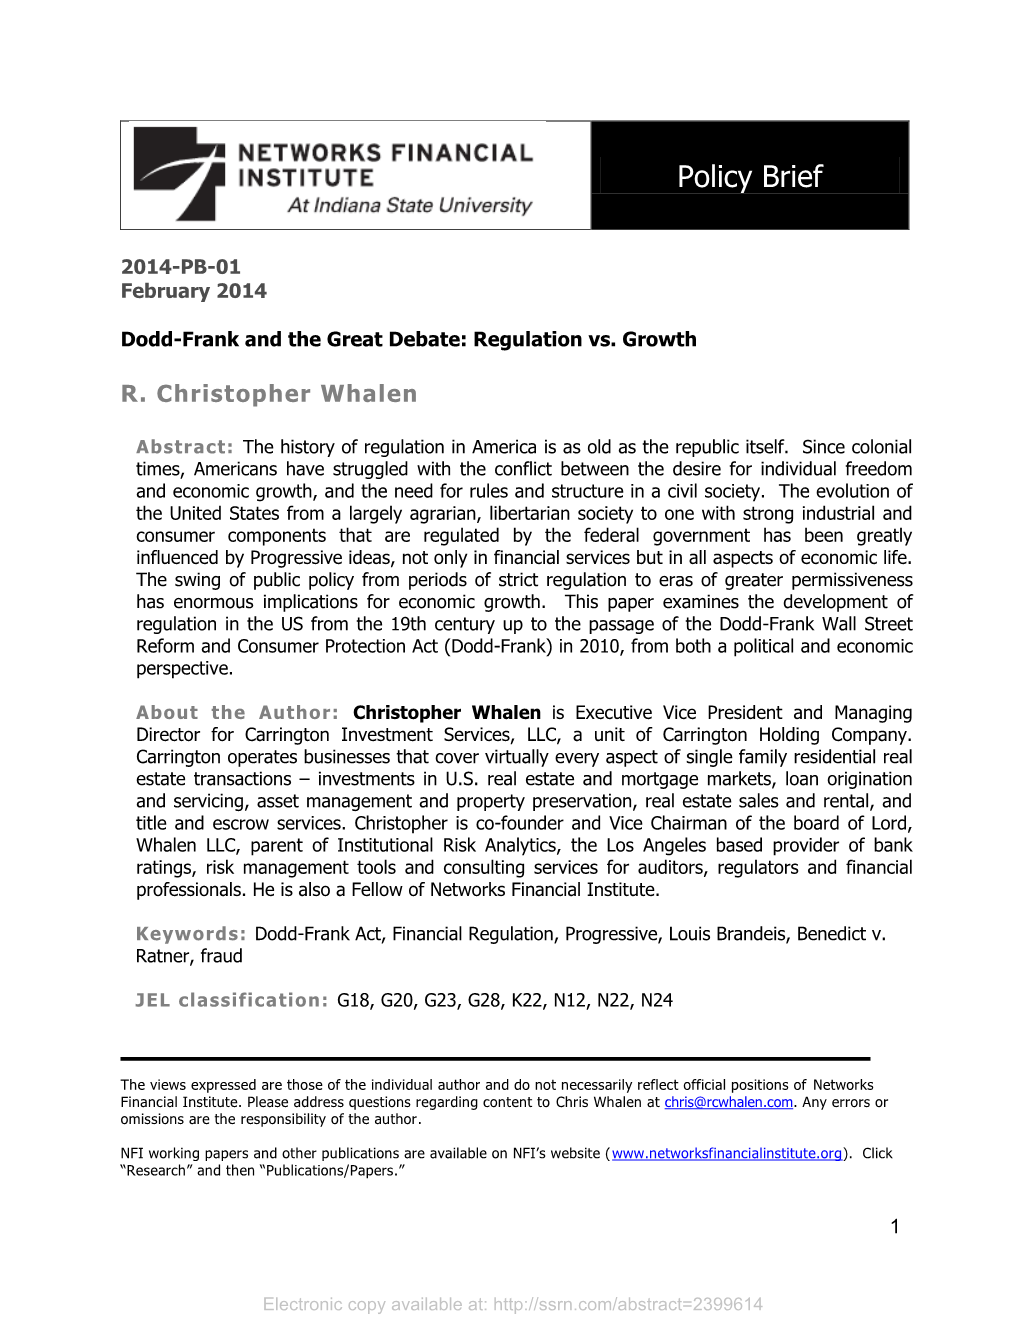 Dodd-Frank and the Great Debate: Regulation Vs